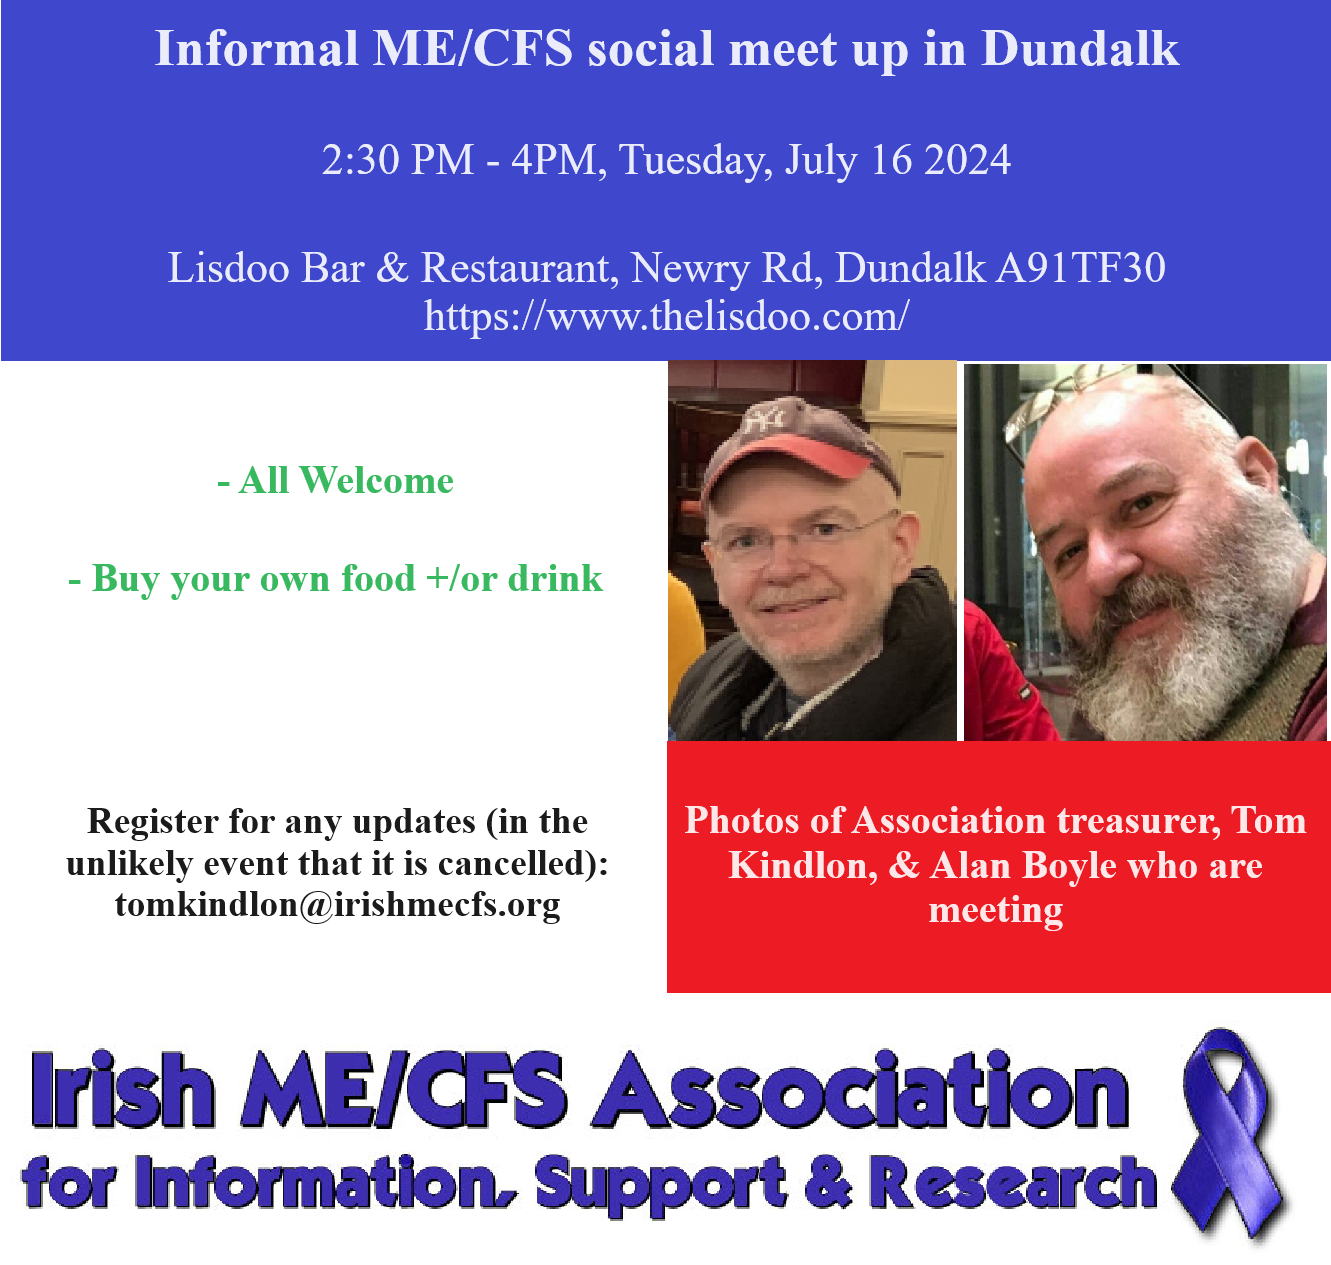 Dundalk: Informal ME/CFS social meet-up on Tuesday, July 16 hosted by Tom Kindlon